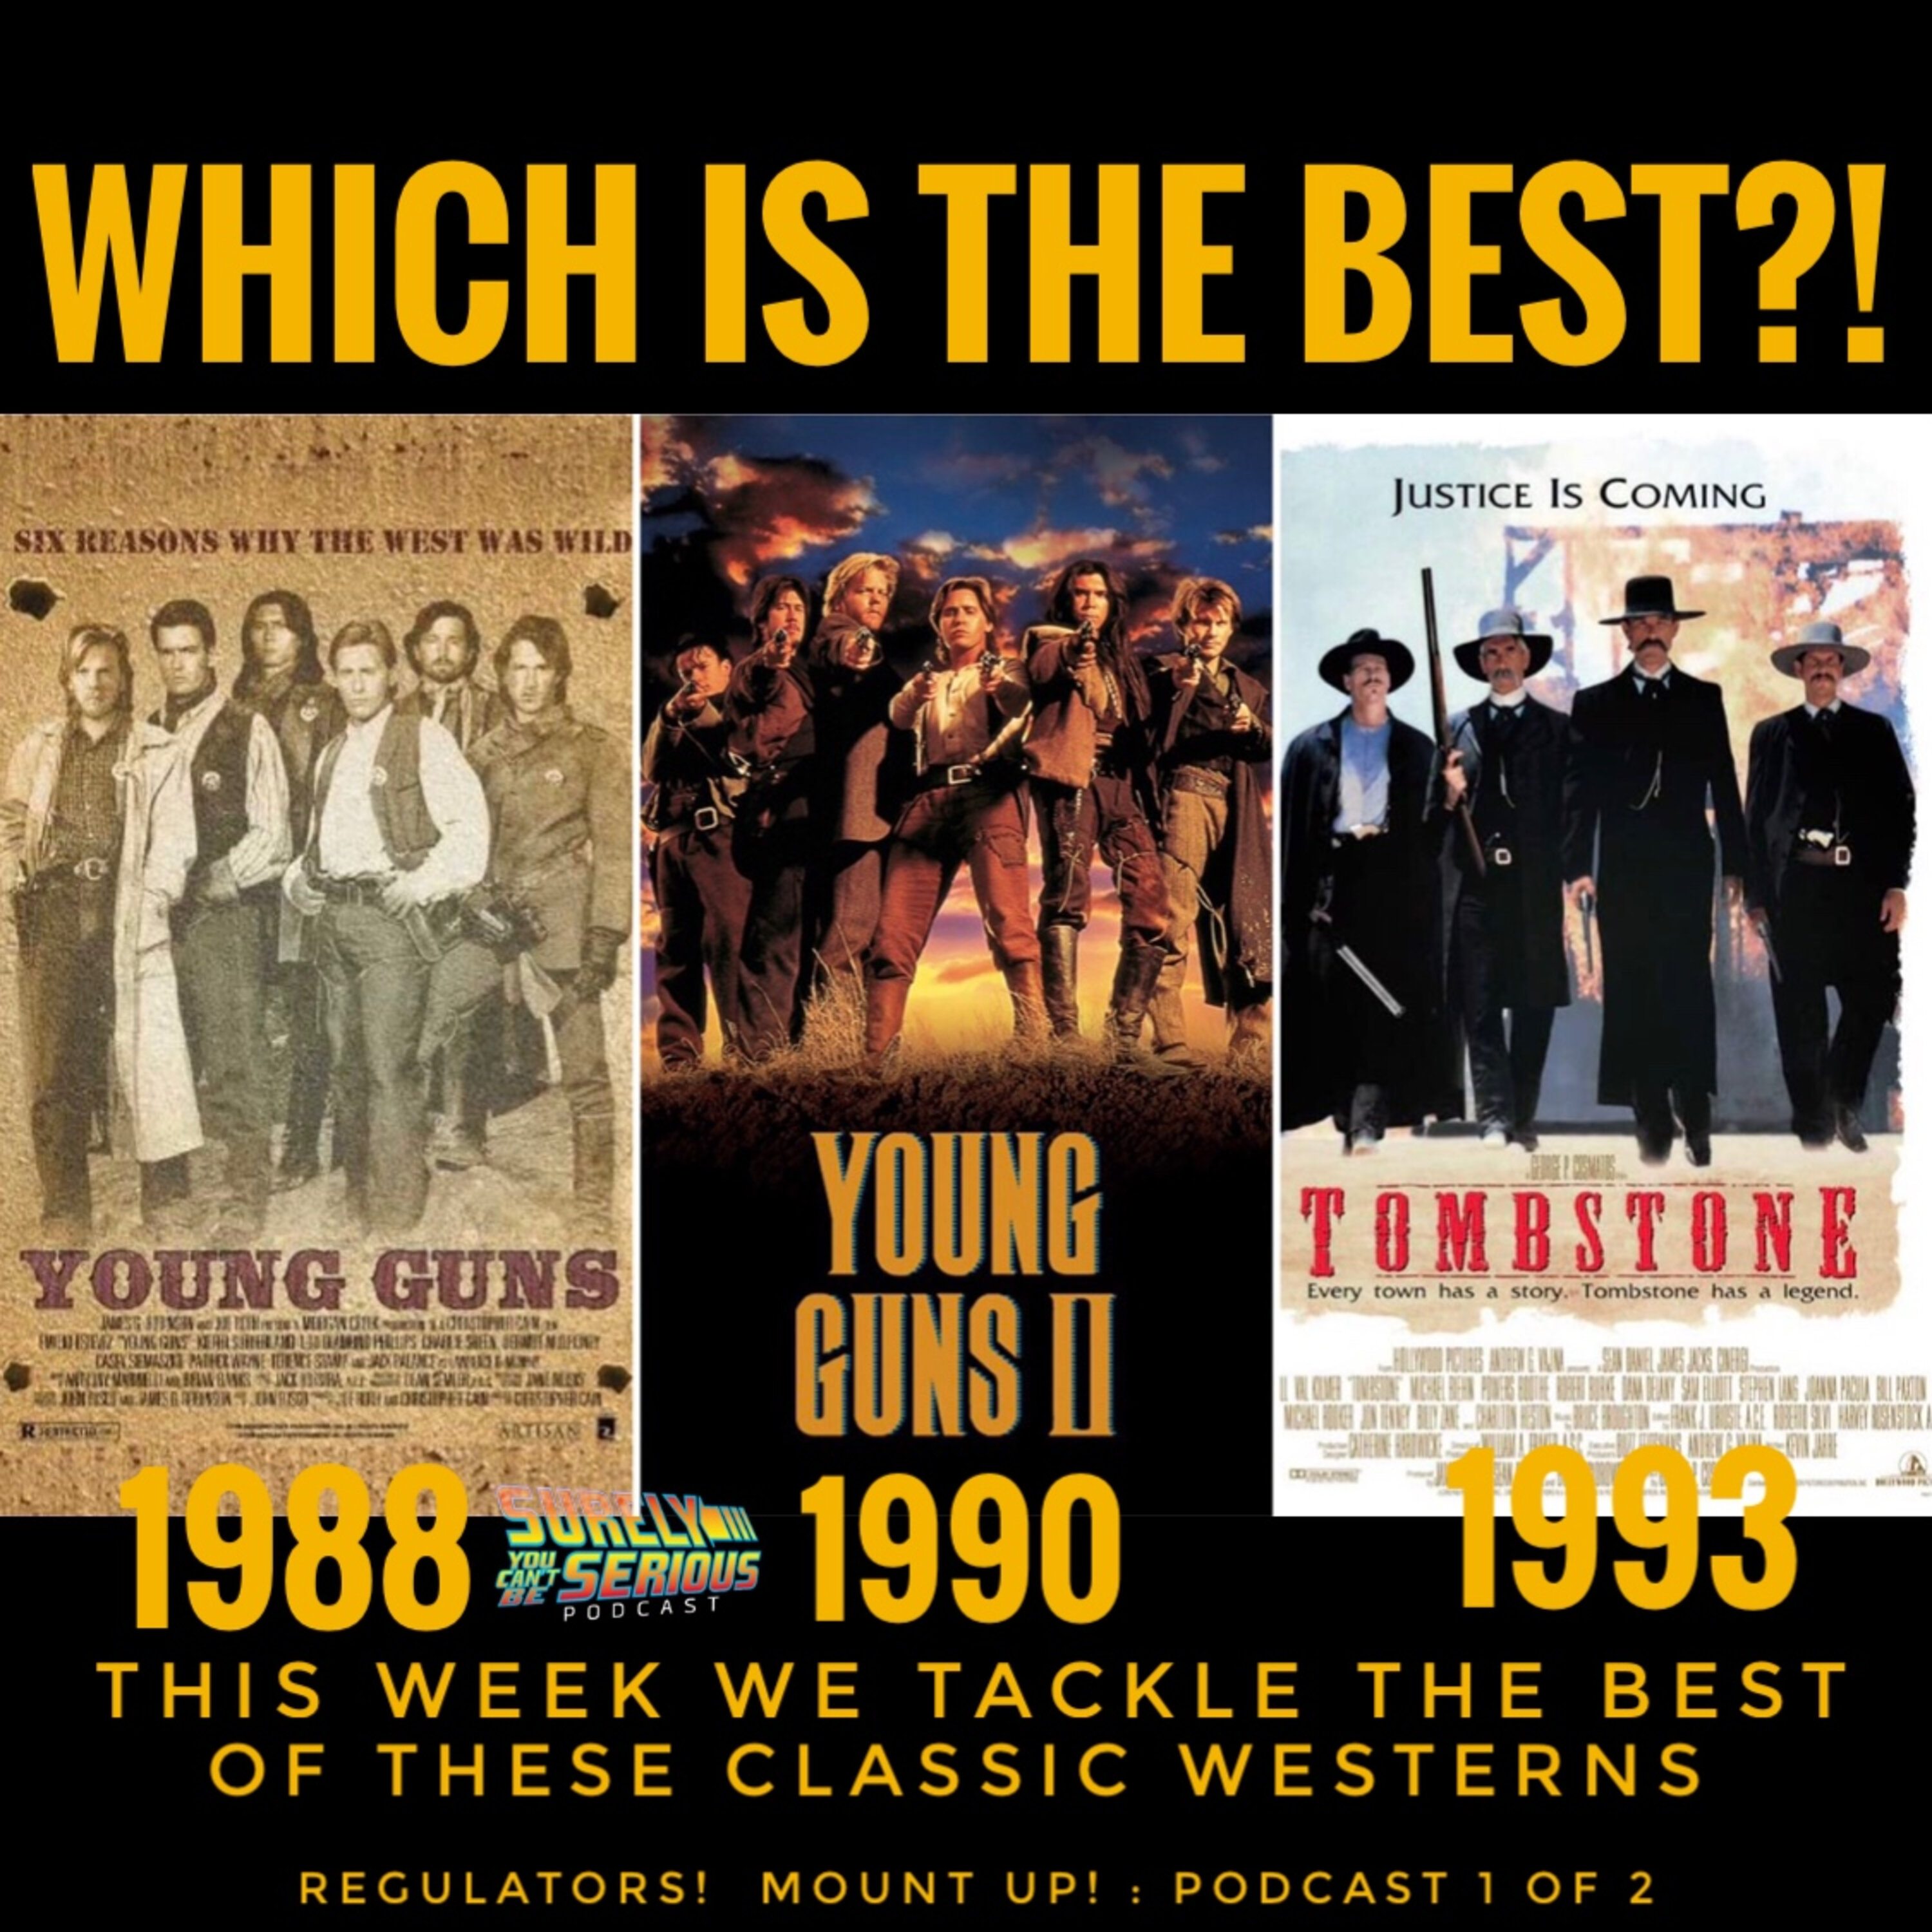 Young Guns (1988) vs. Young Guns II (1990) vs. Tombstone (1993) Image